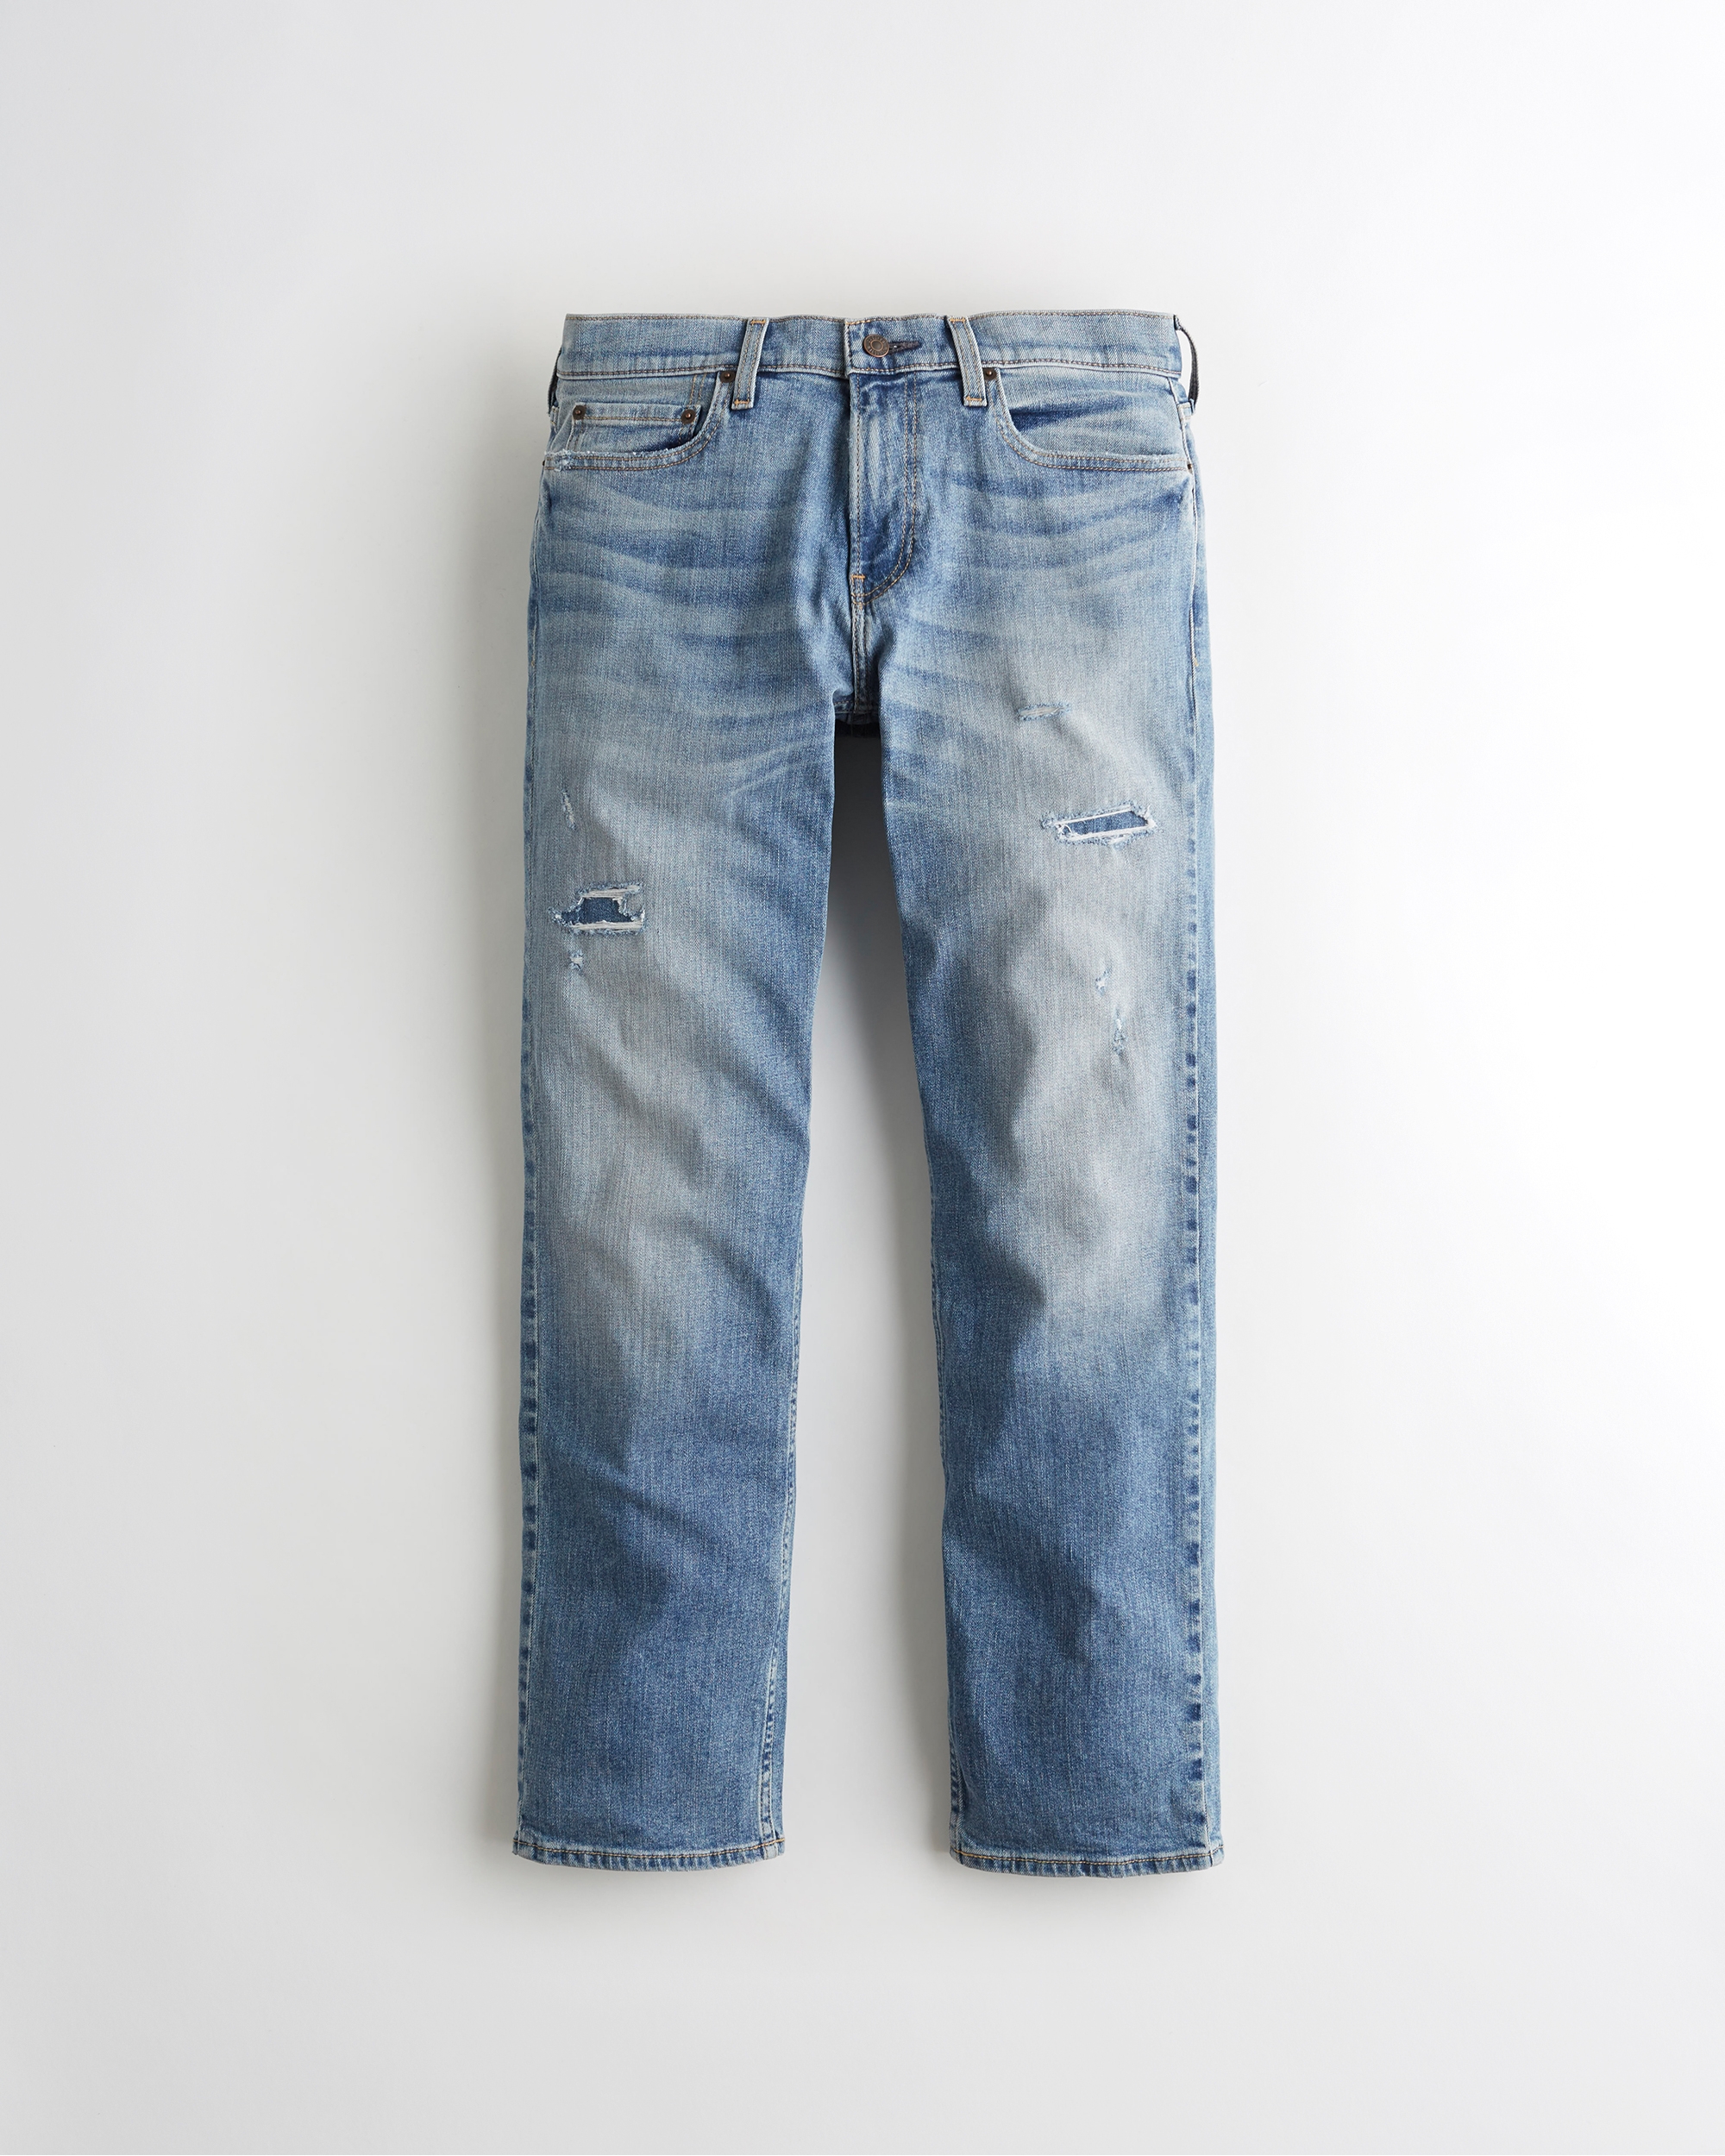 hollister jeans sale